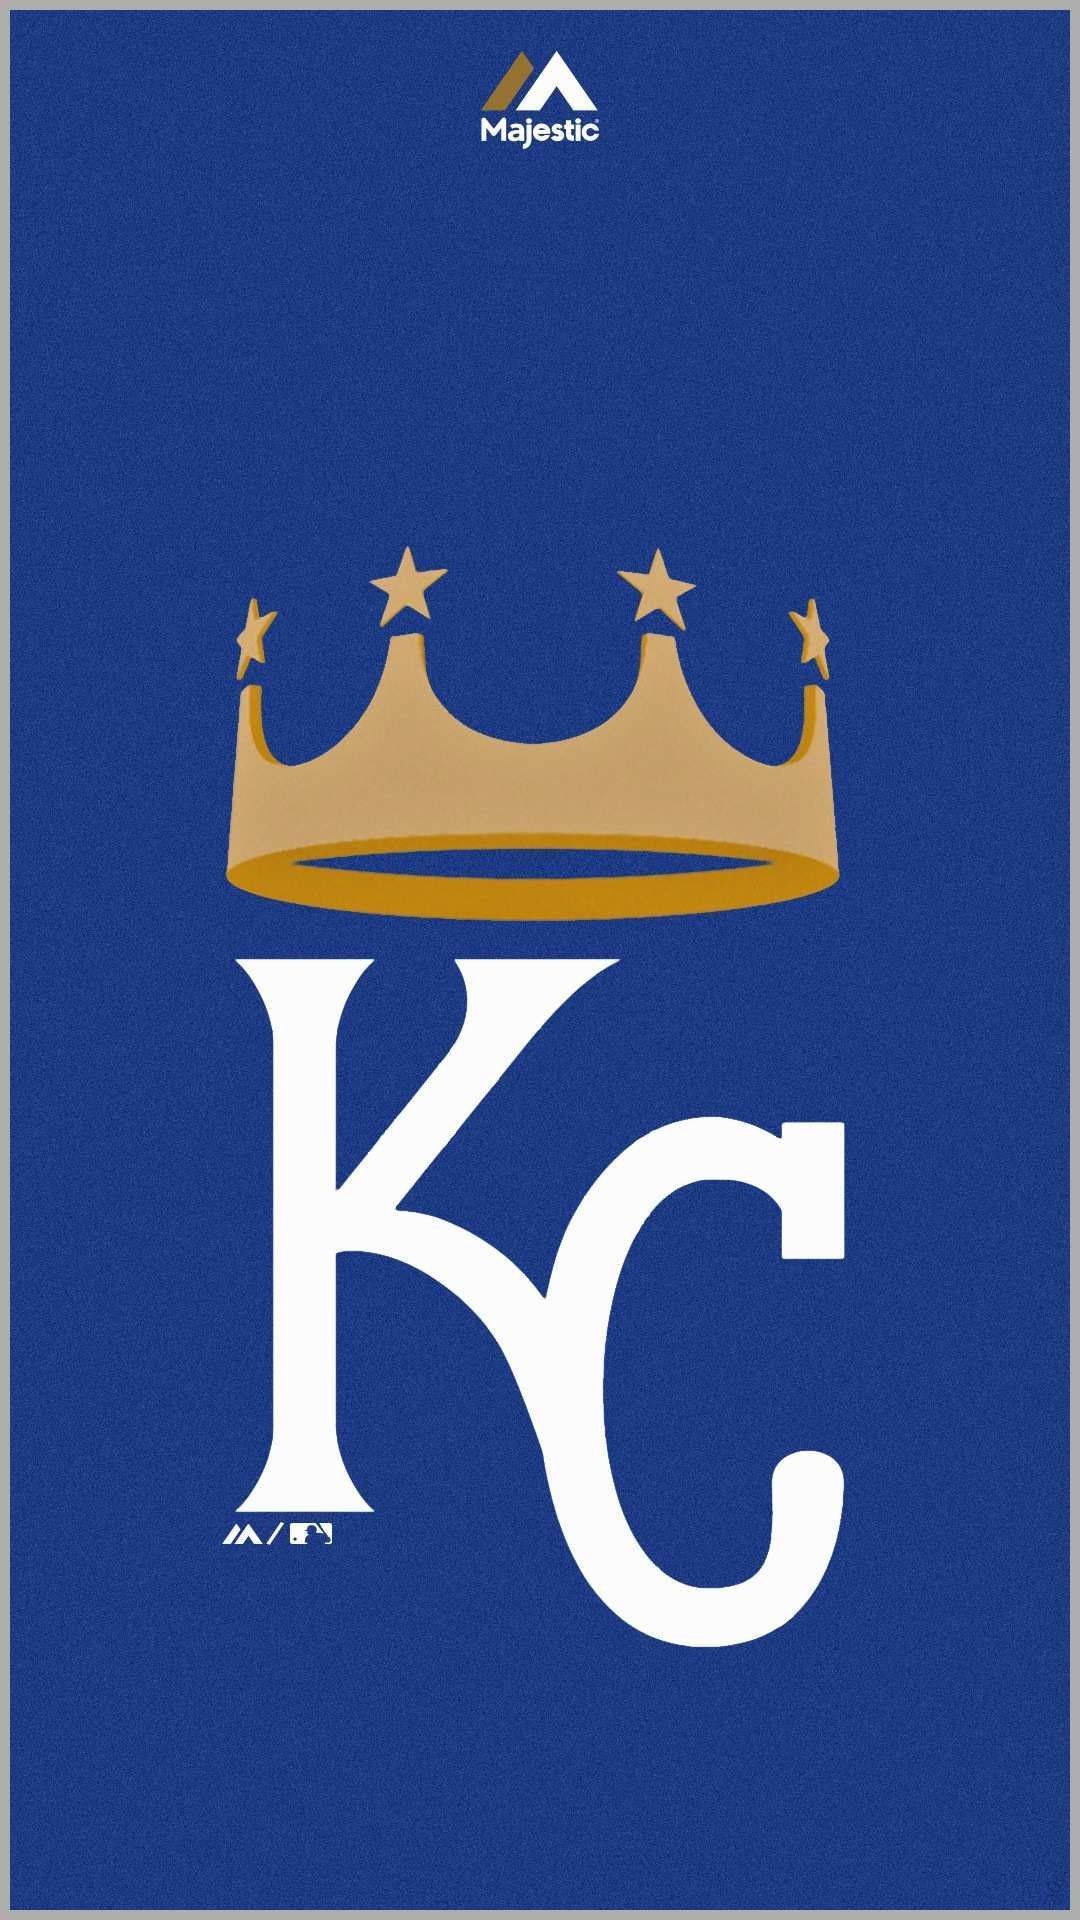 Kansas City Royals Widescreen Wallpapers 33135 - Baltana